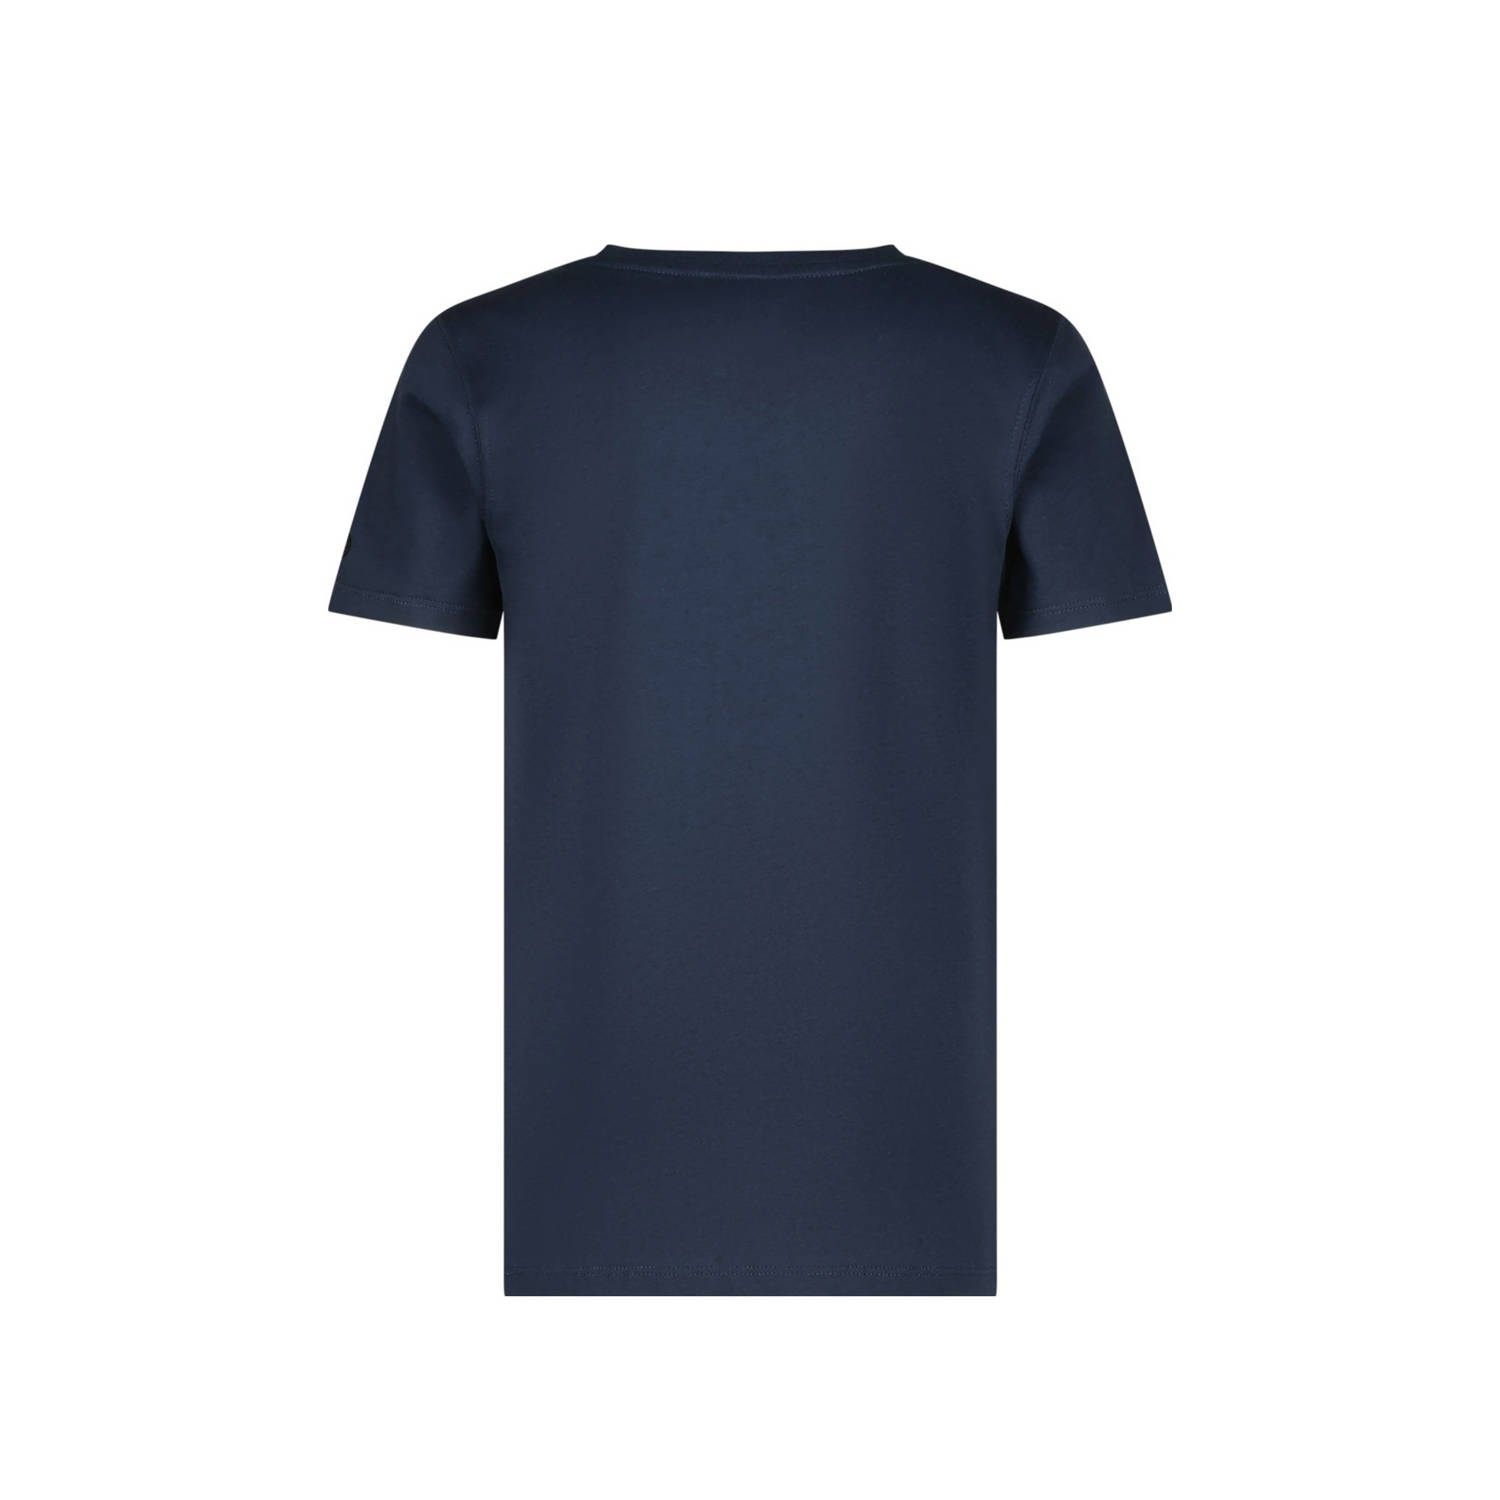 Raizzed T-shirt Helix met logo donkerblauw